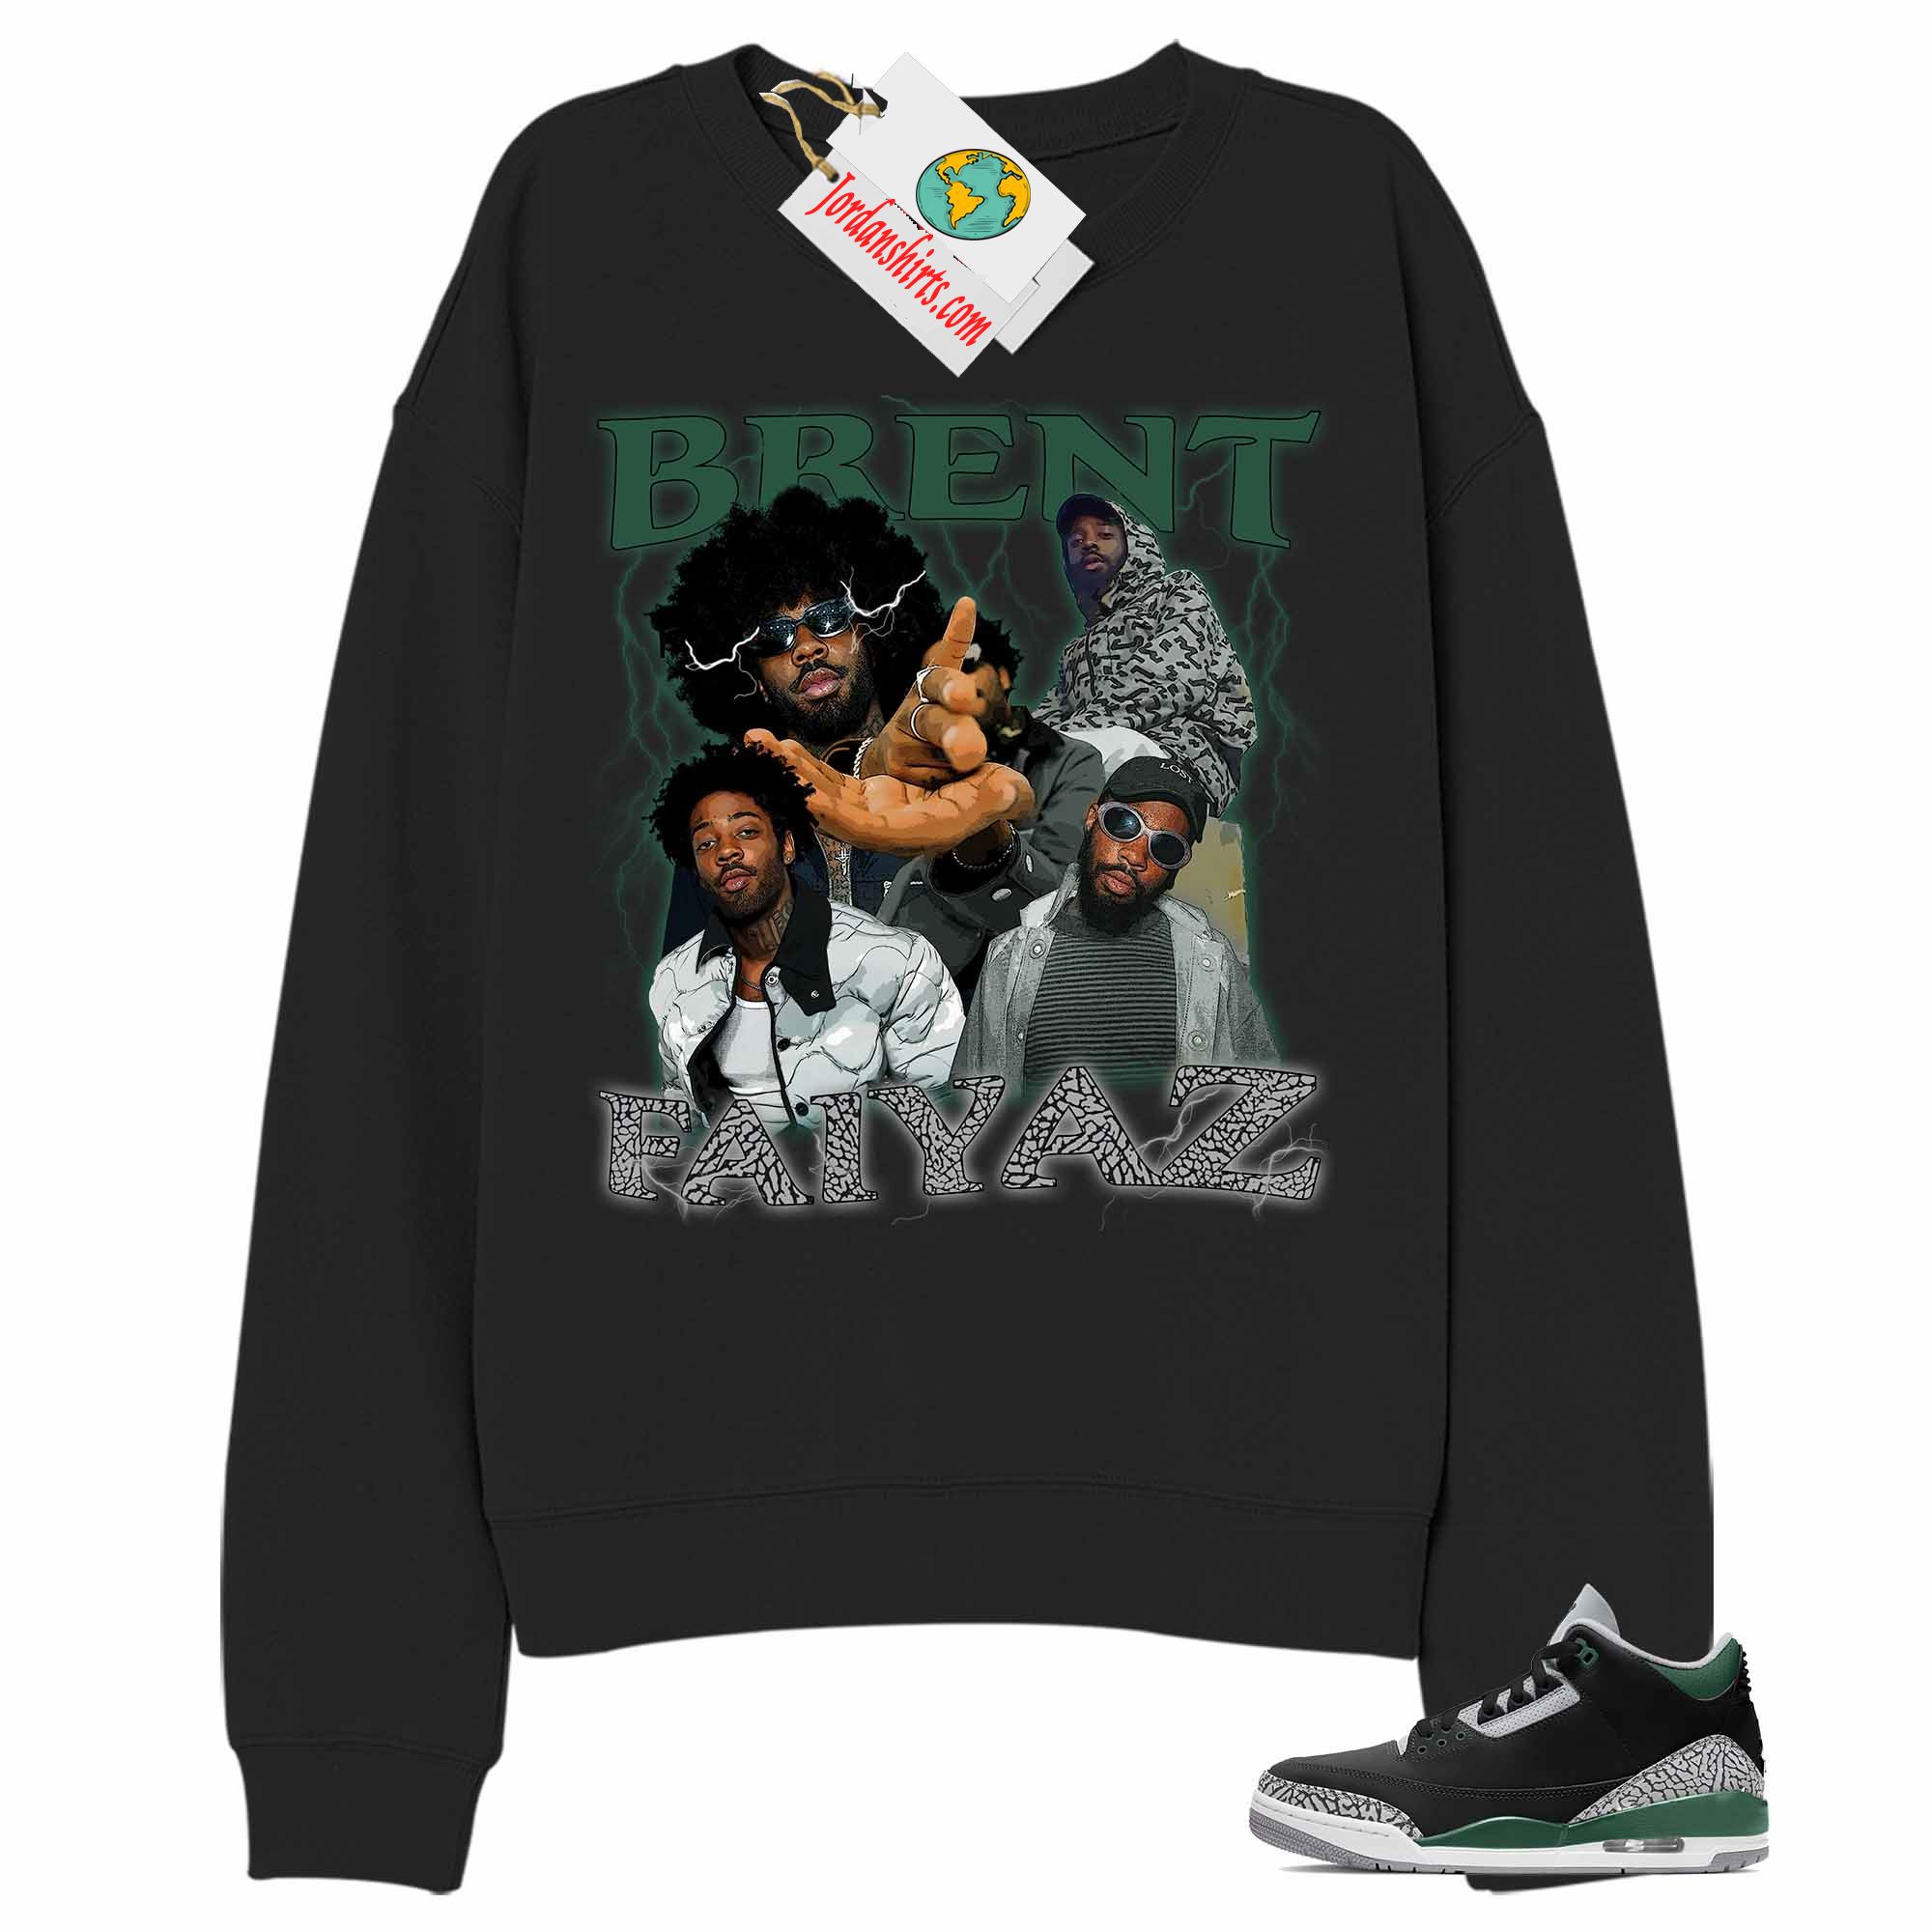 Jordan 3 Sweatshirt, Brent Faiyaz Retro Vintage 90s Hip Hop Raptees Black Sweatshirt Air Jordan 3 Pine Green 3s Size Up To 5xl